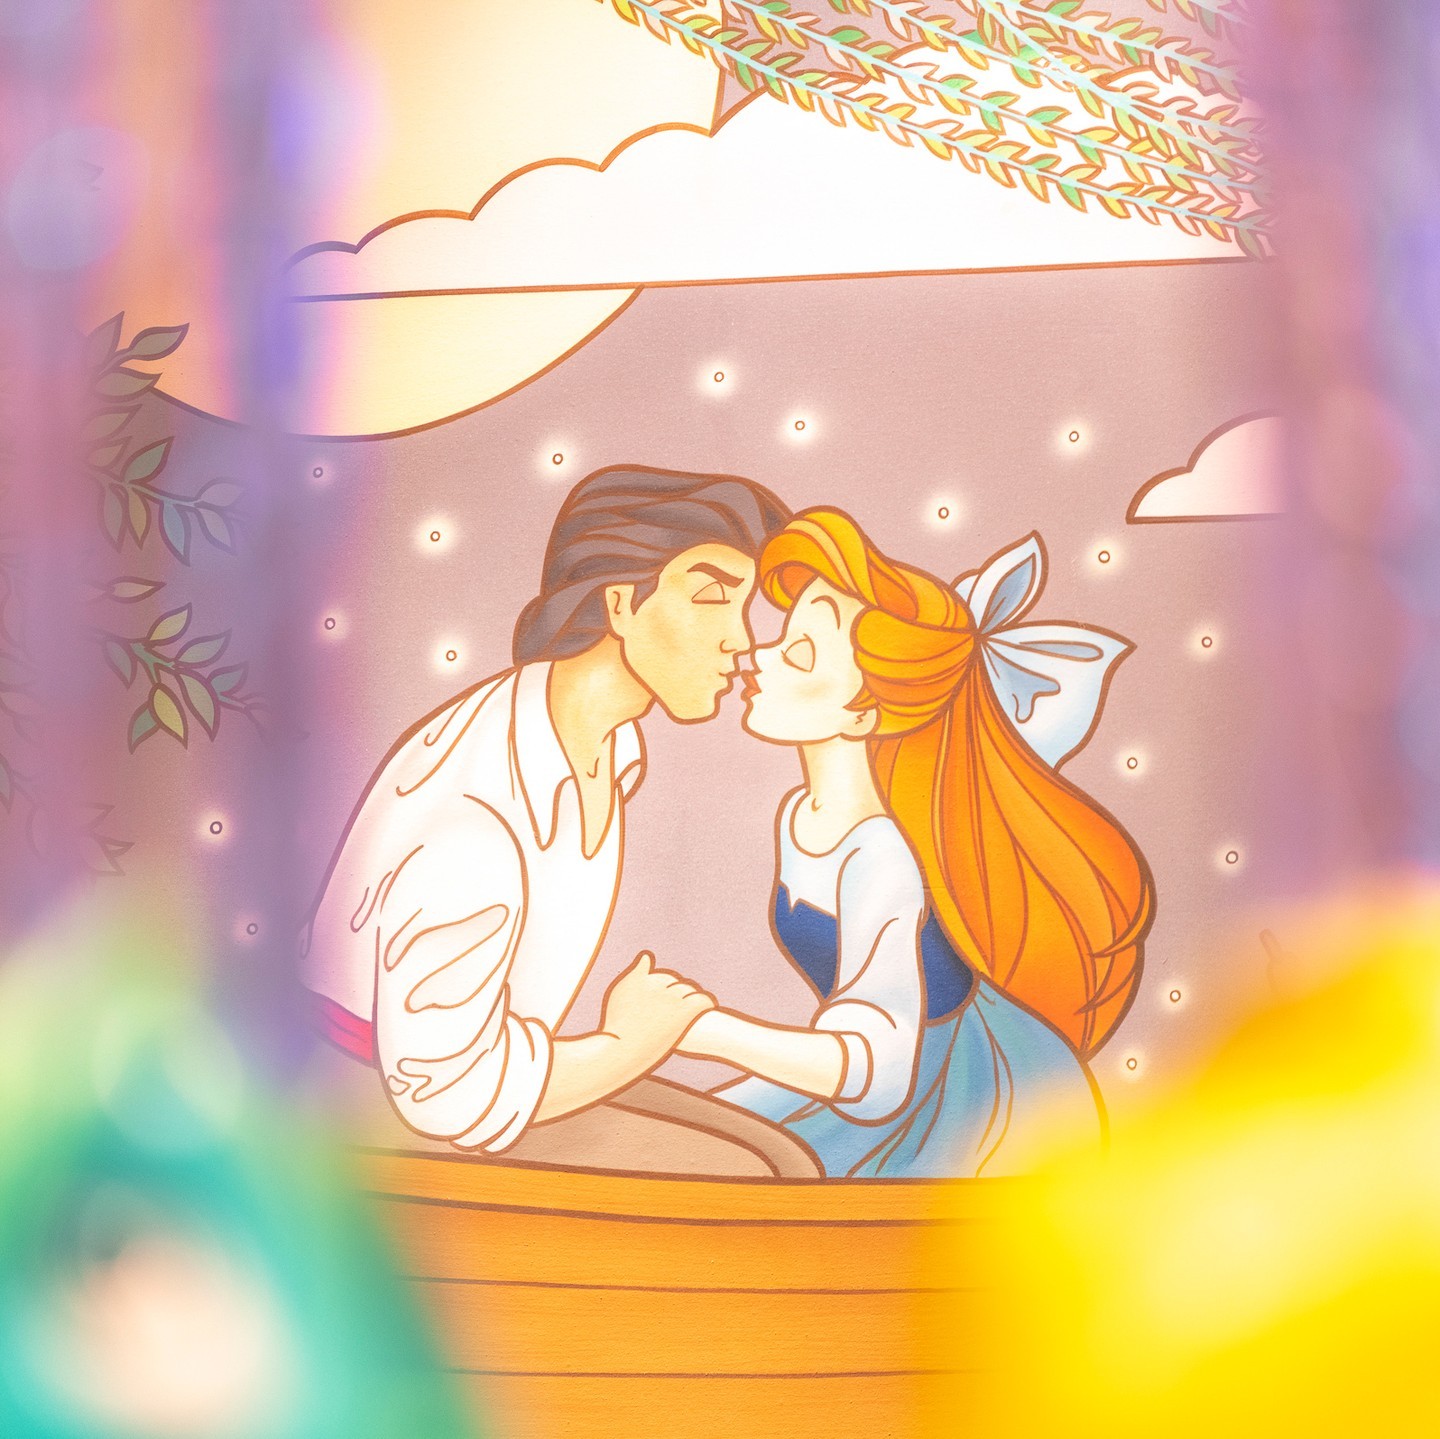 True romance♡
この幸せよ、永遠に
#ariel #princeeric #thelittlemermaid #kissdegirlfashions... 이미지